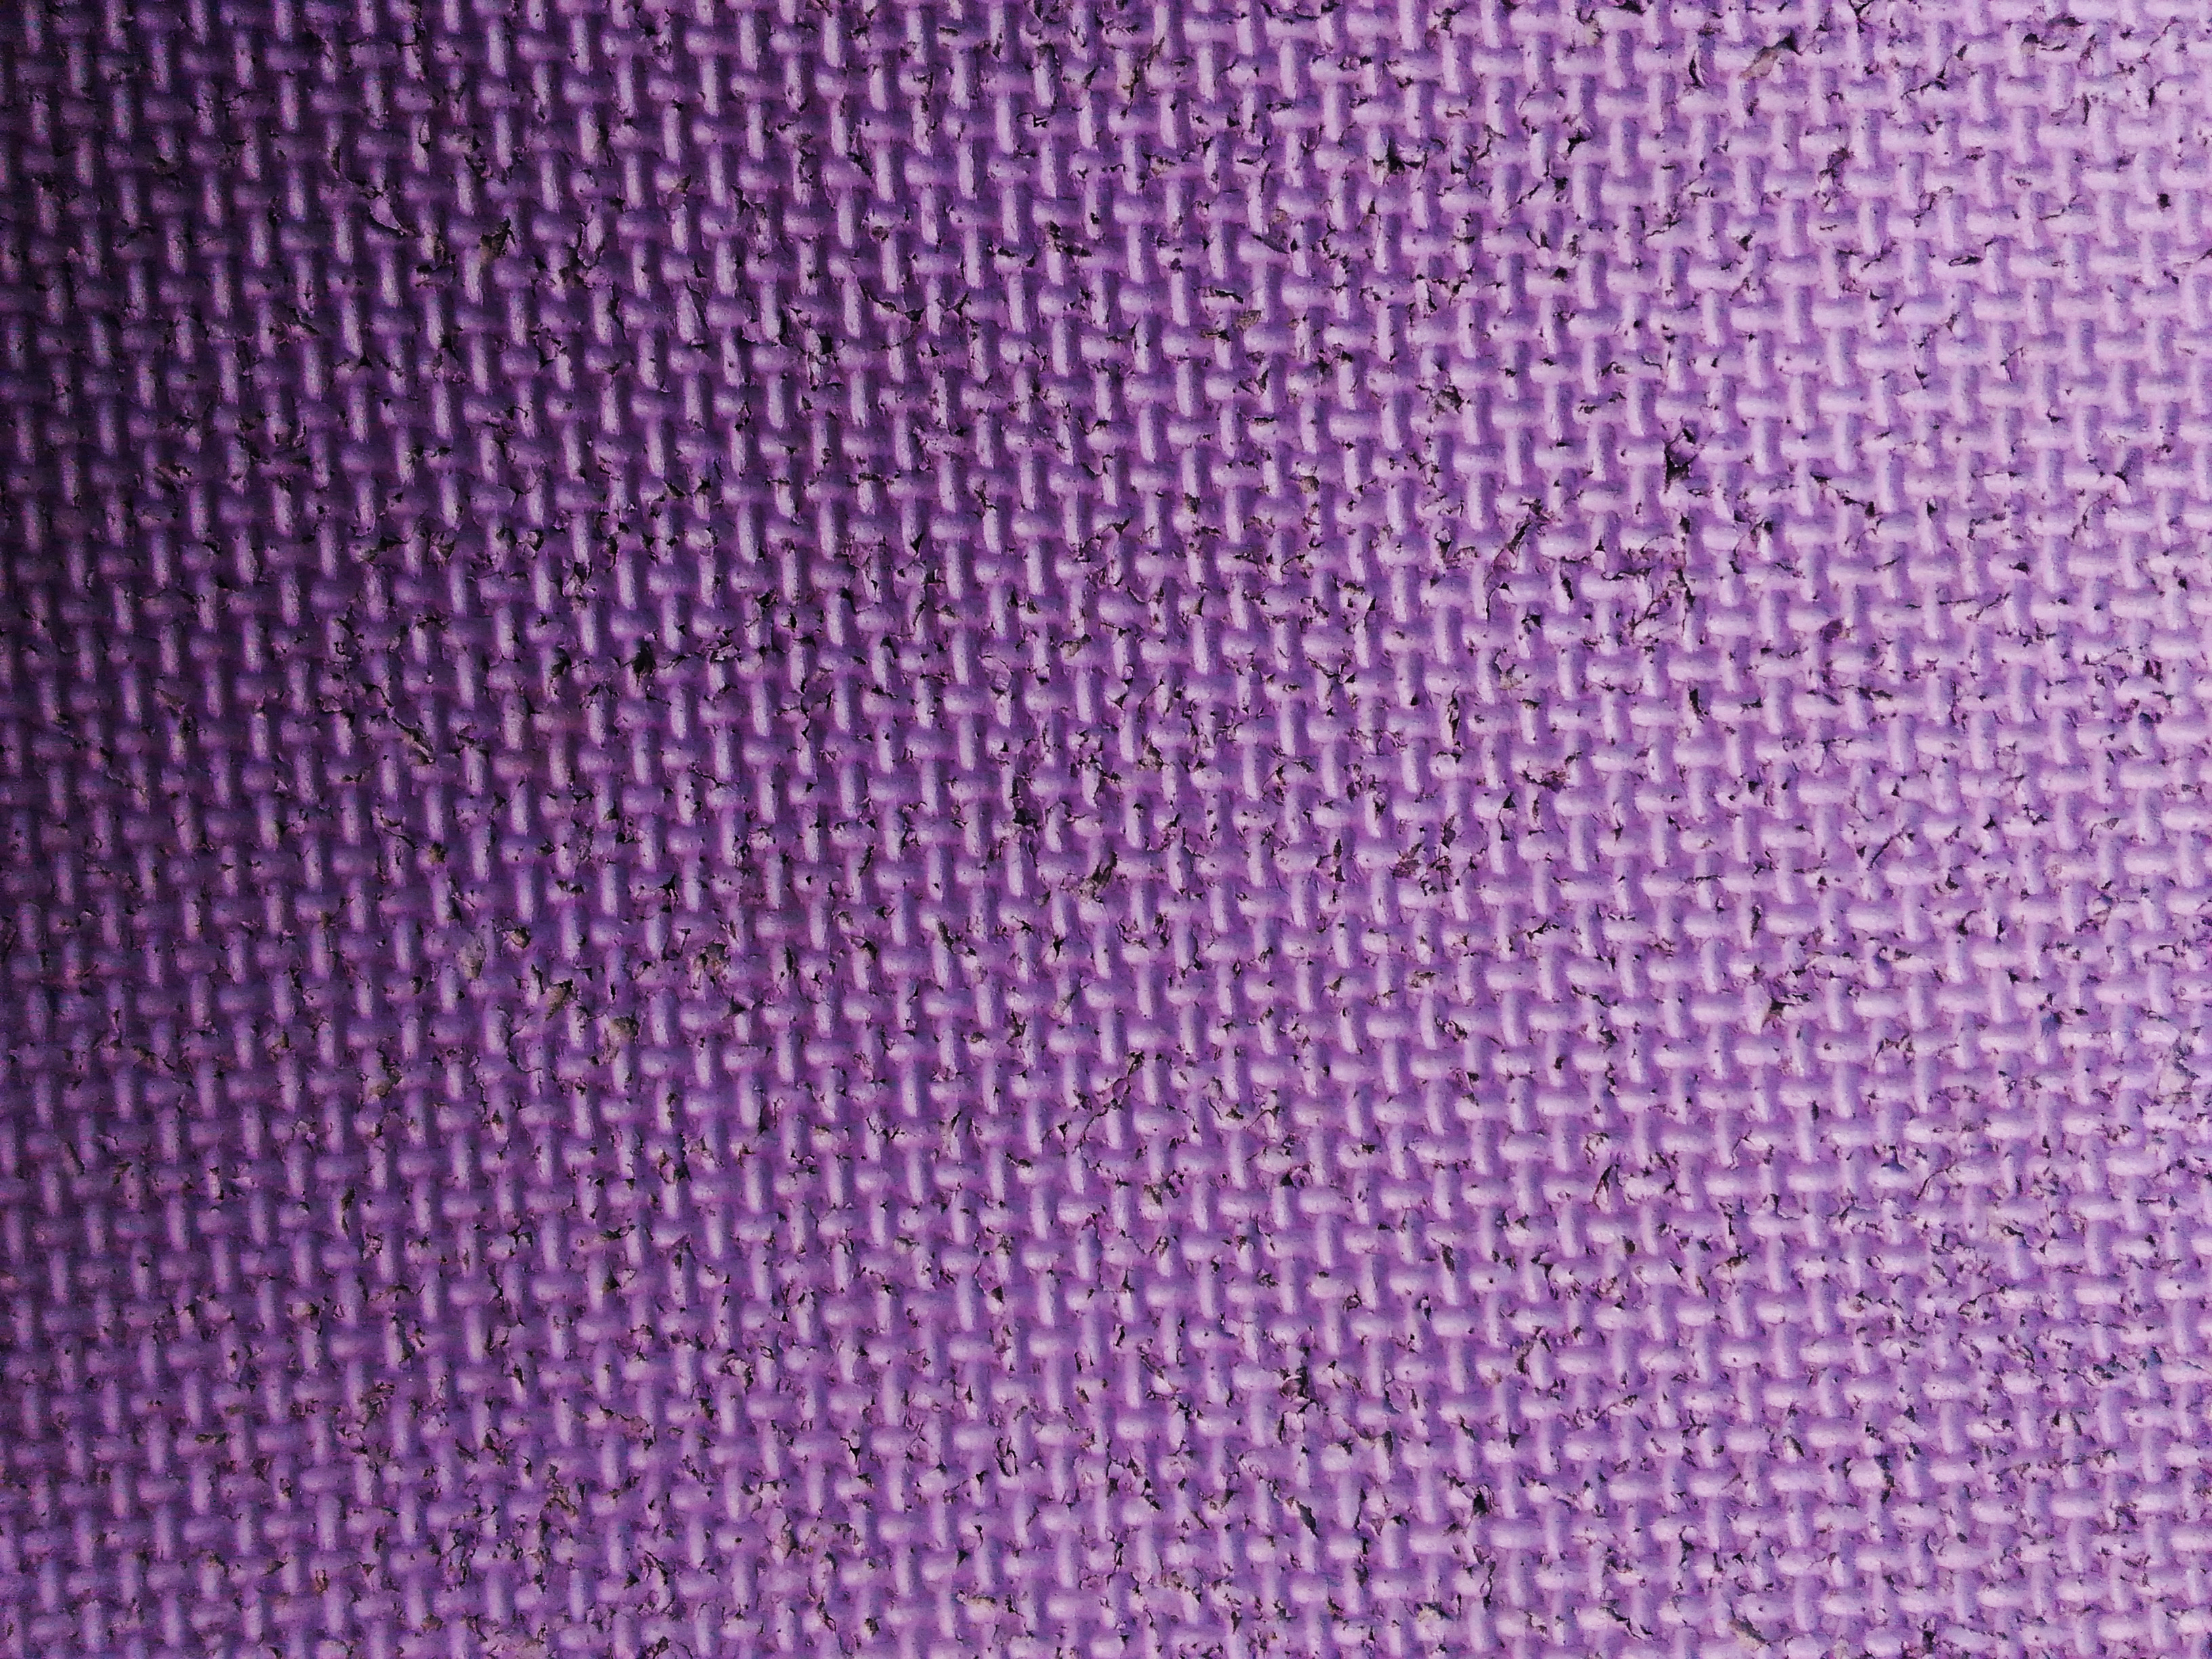 Free photo: Purple Fabric Texture - Clothing, Fabric ...
